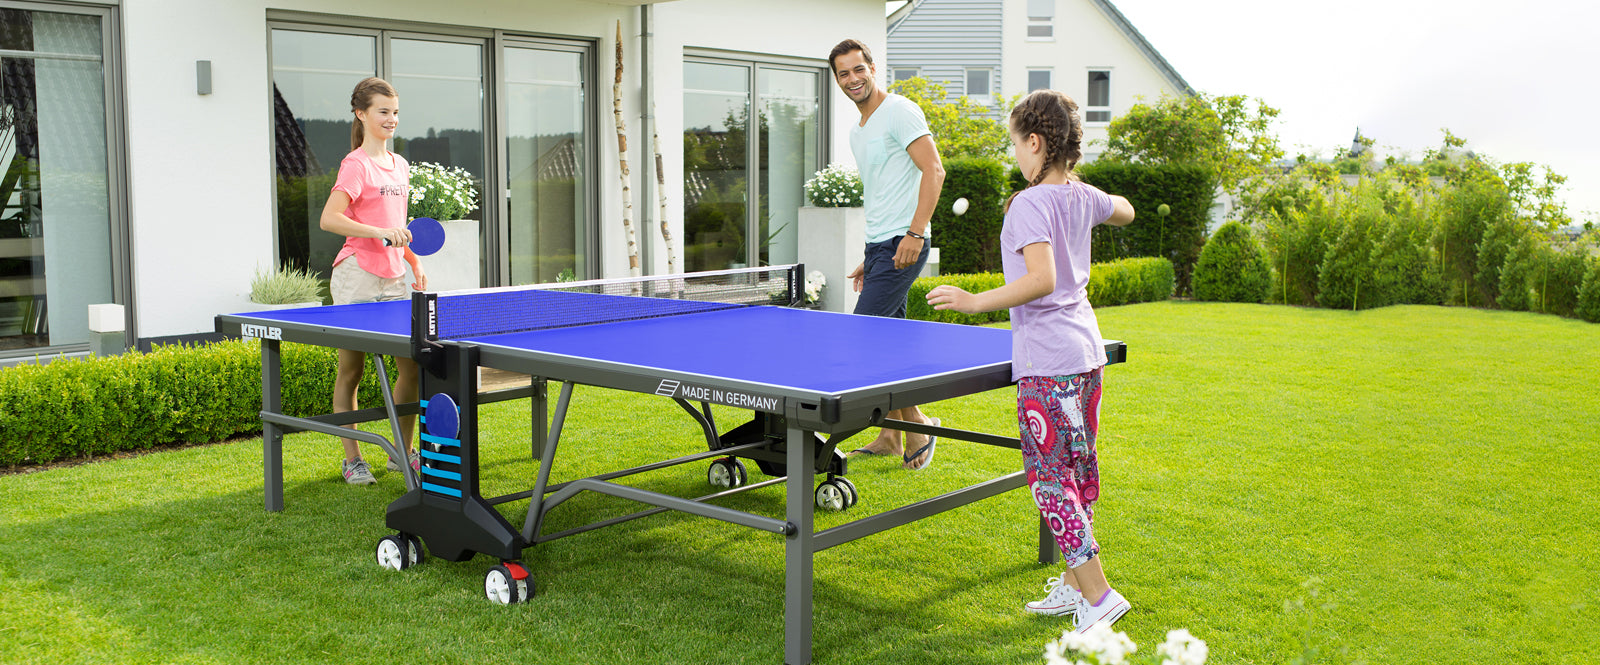 KETTLER Outdoor Table Tennis Tables